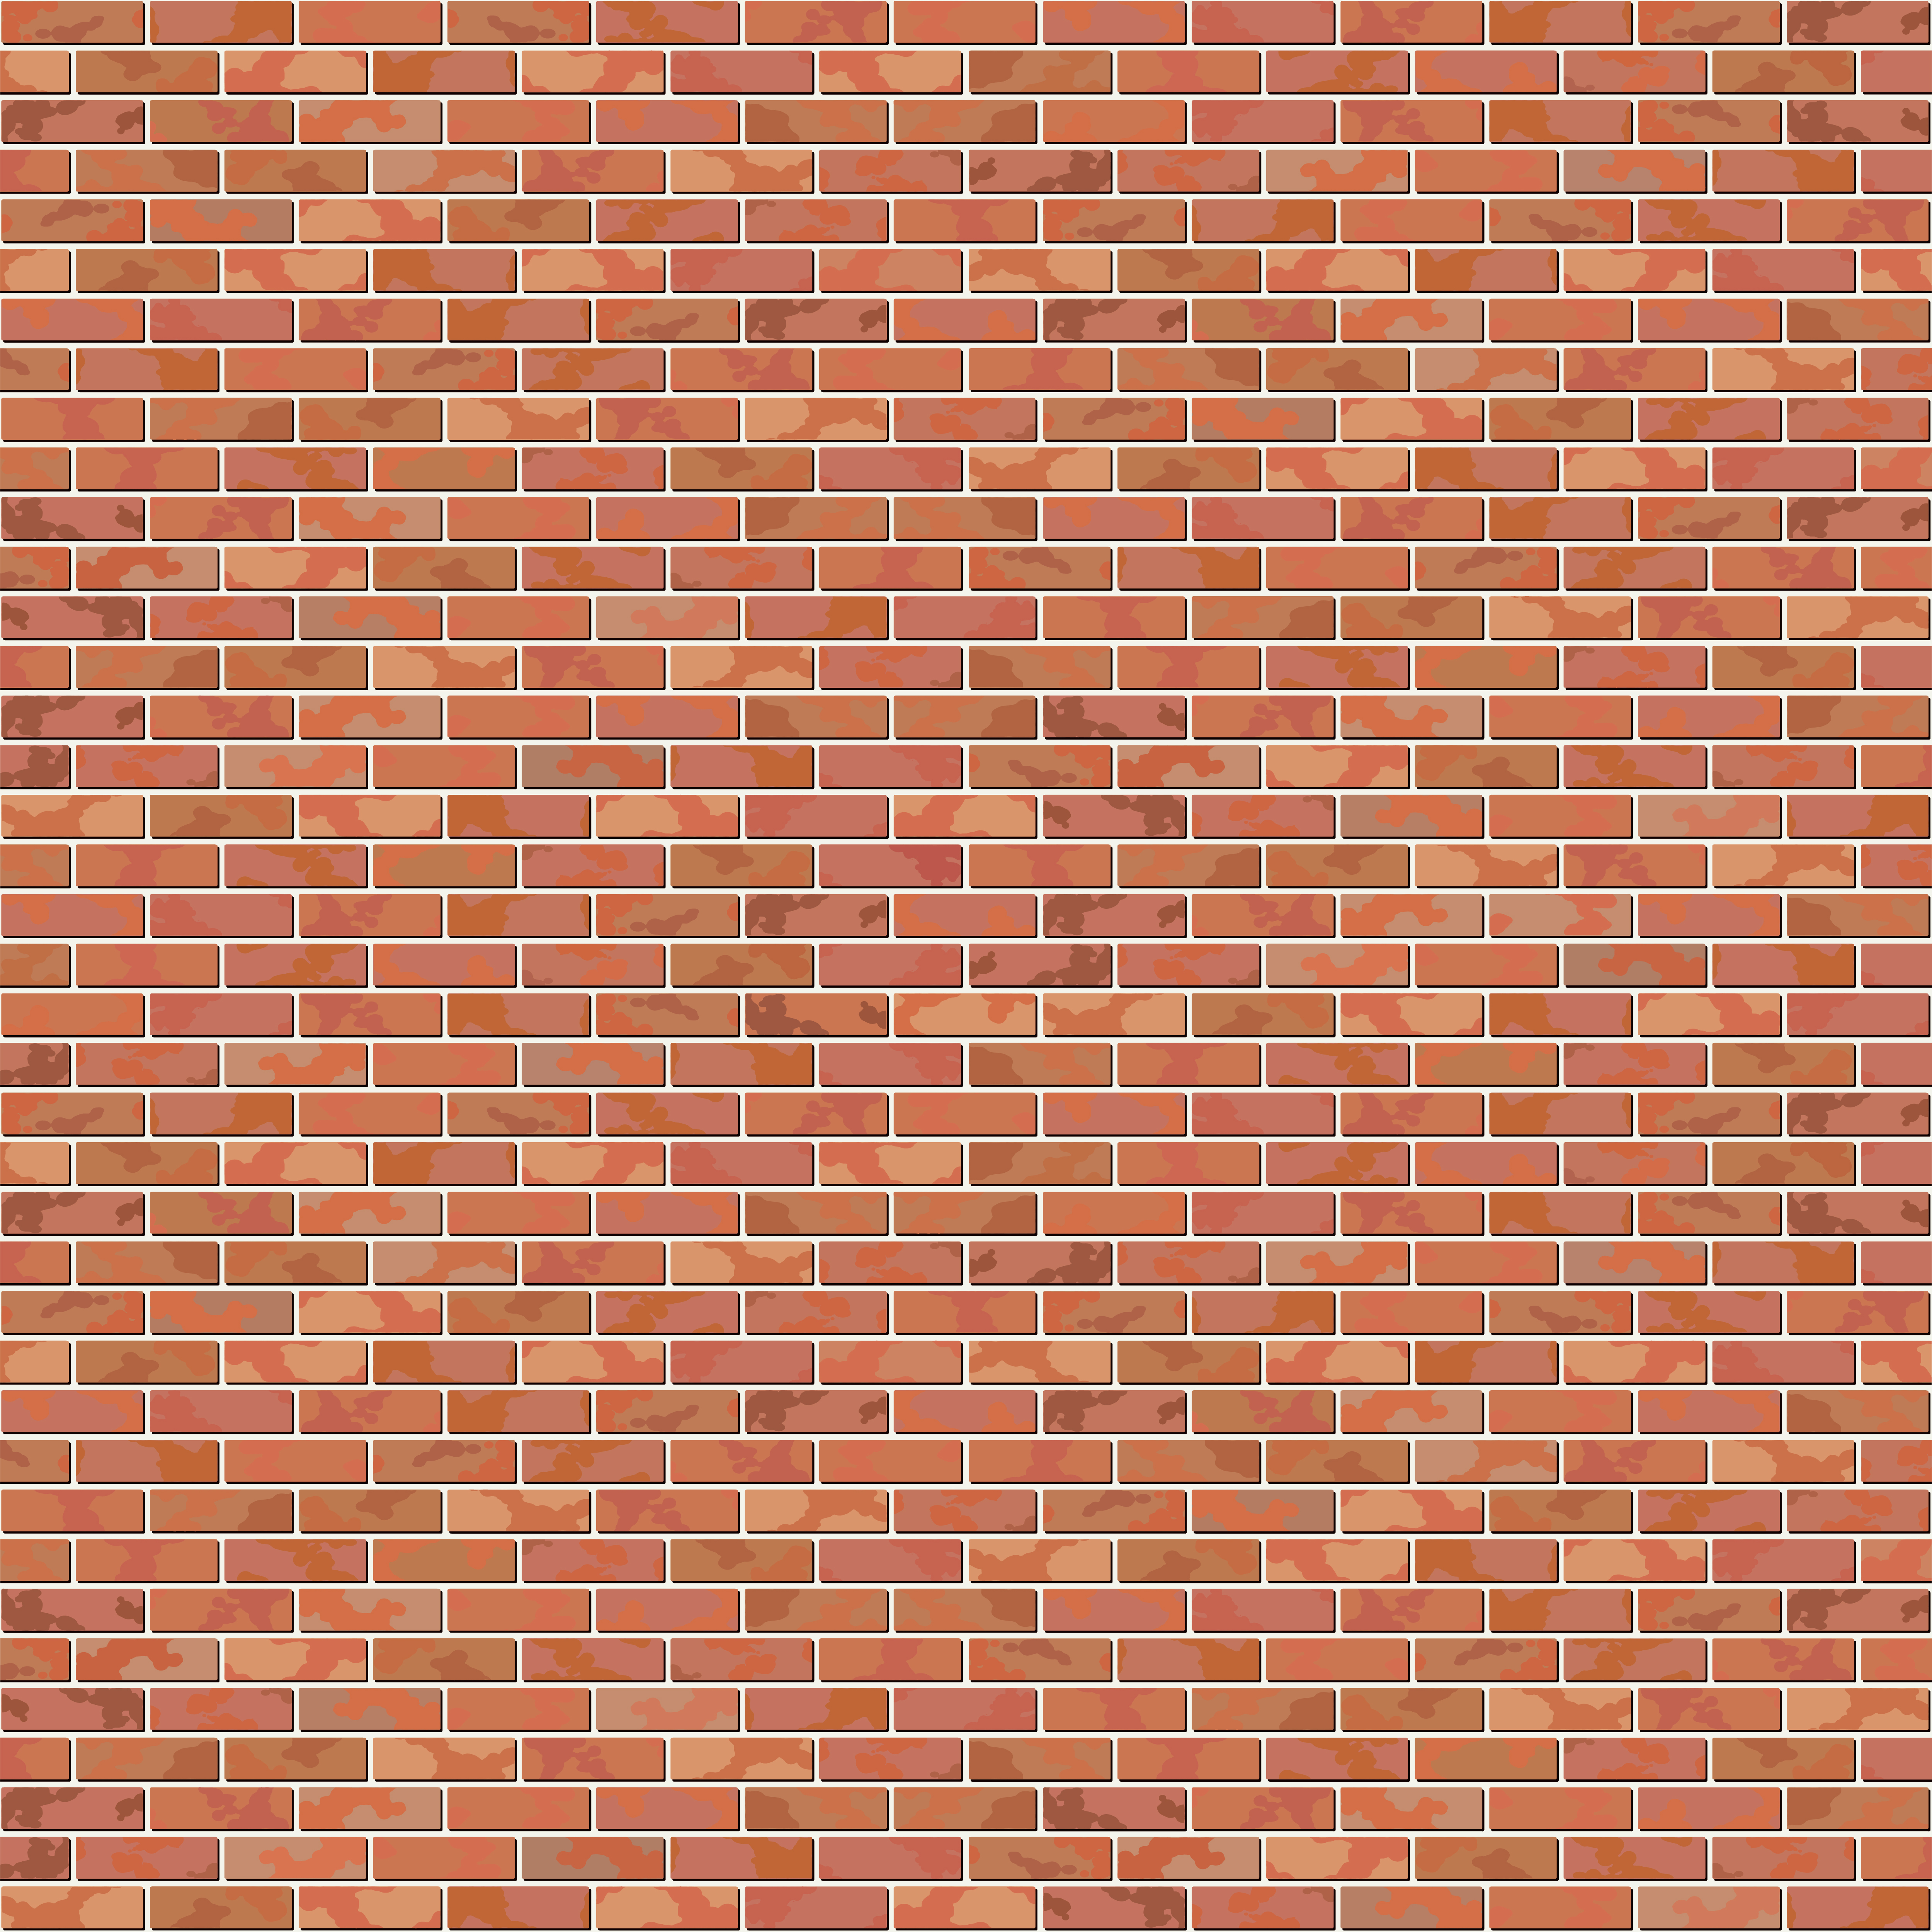 HD Vintage brick wall backgro